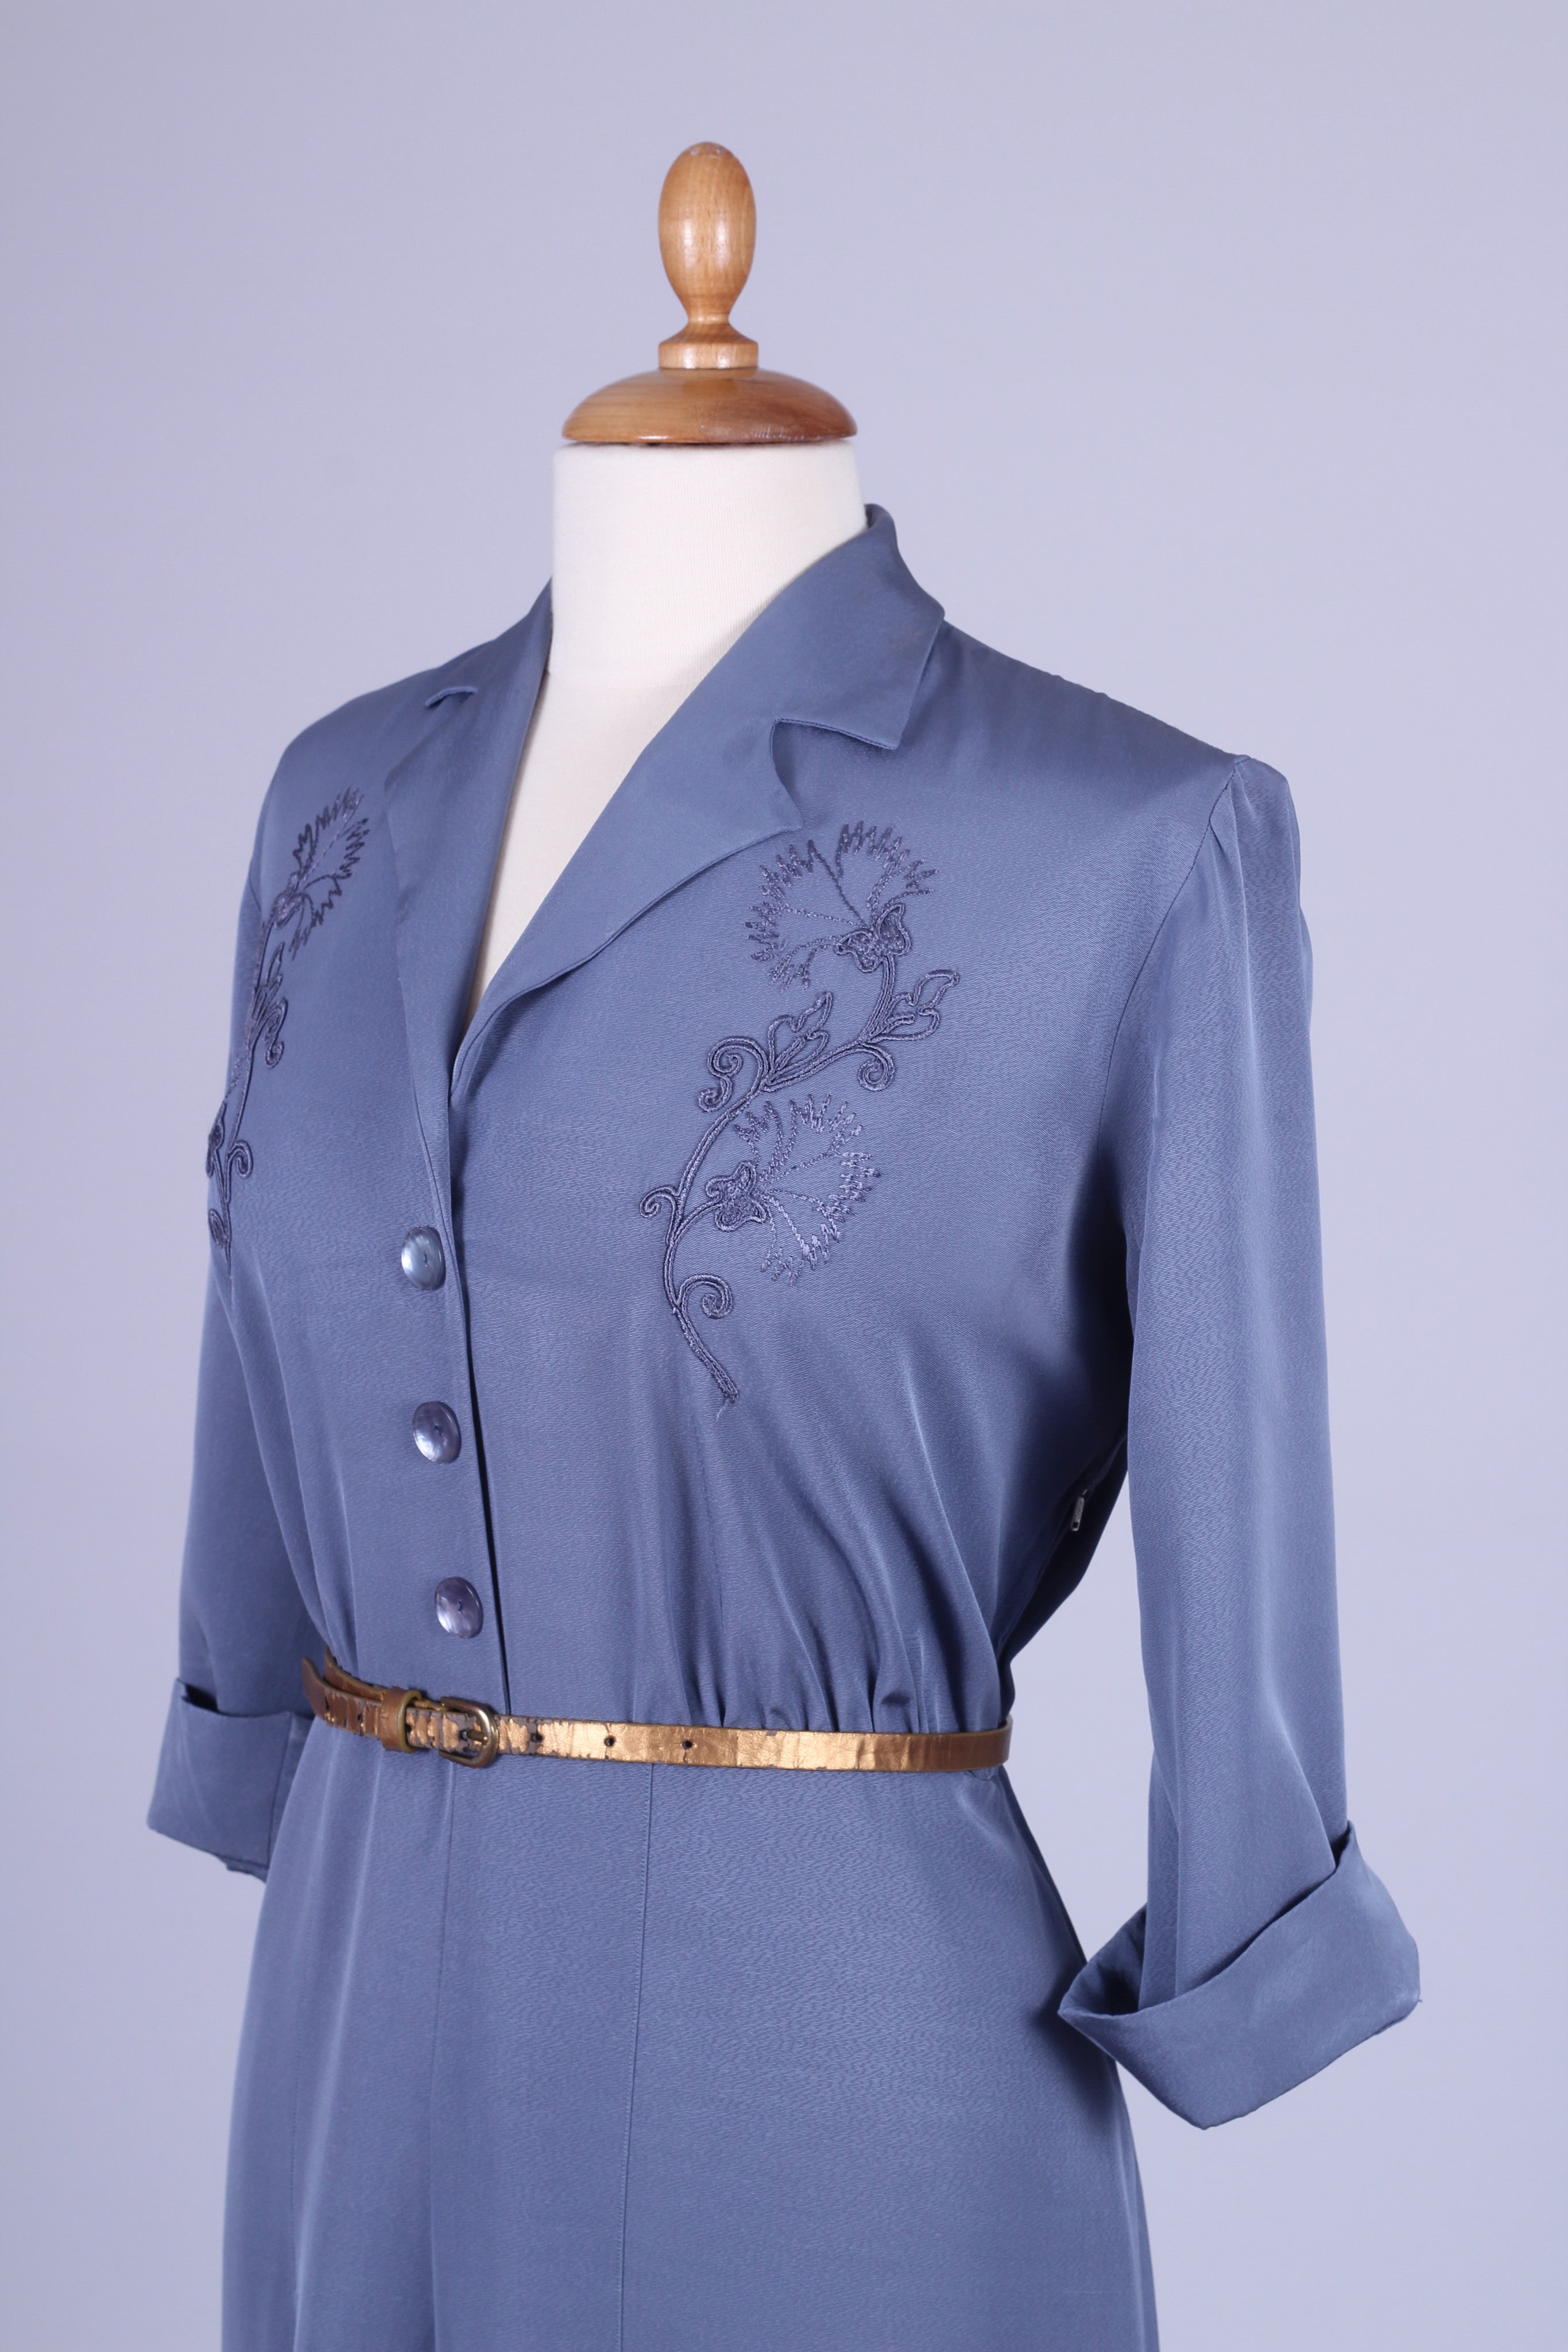 Lavendelfarvet kjole 1950. M-L